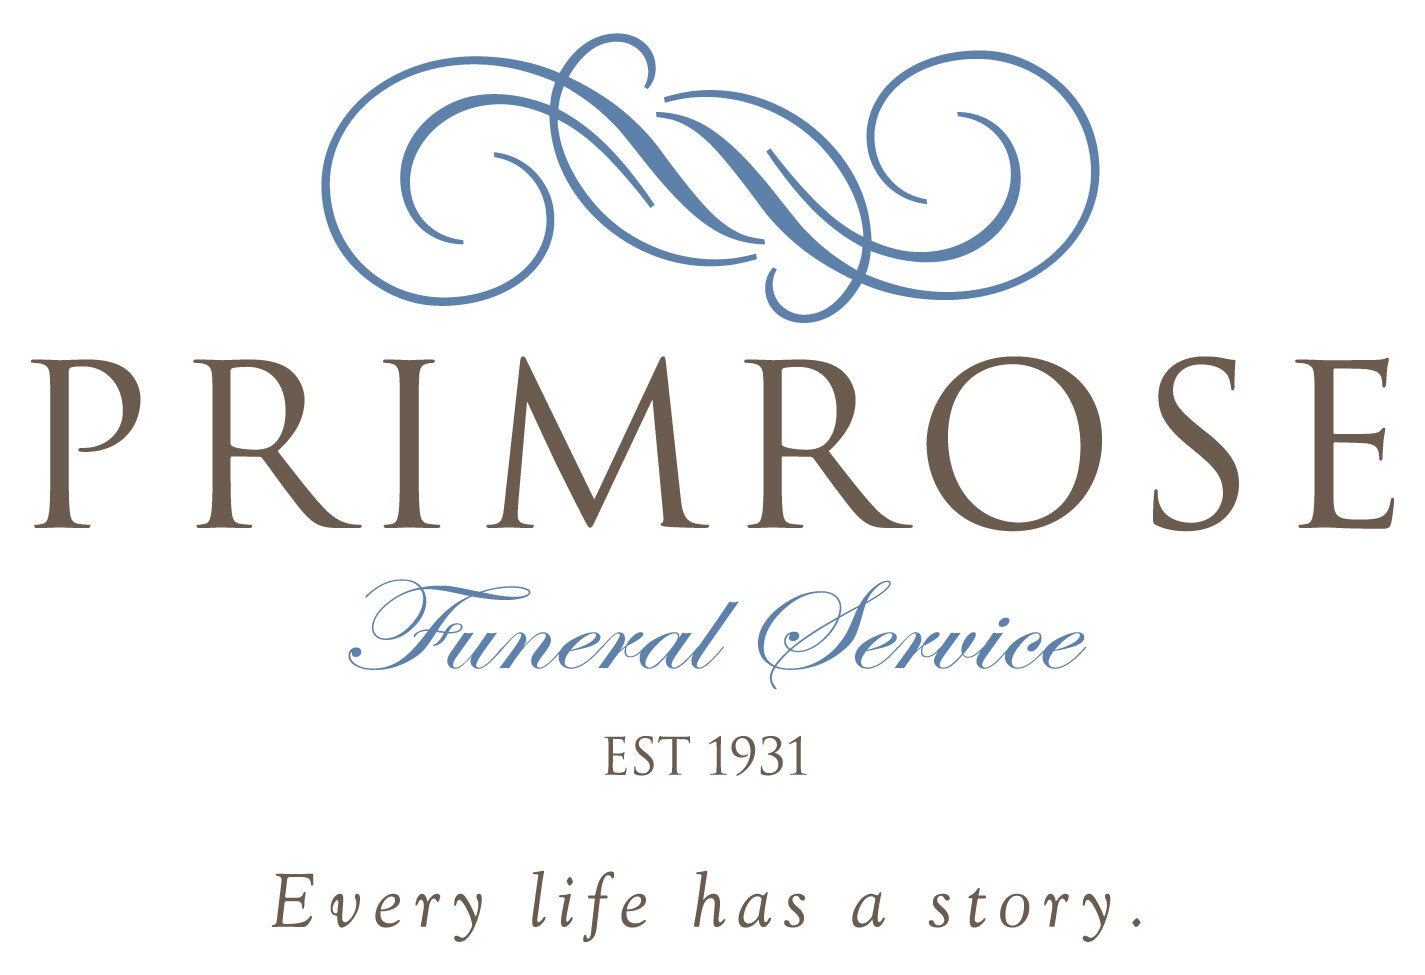 Primrose Funeral Service